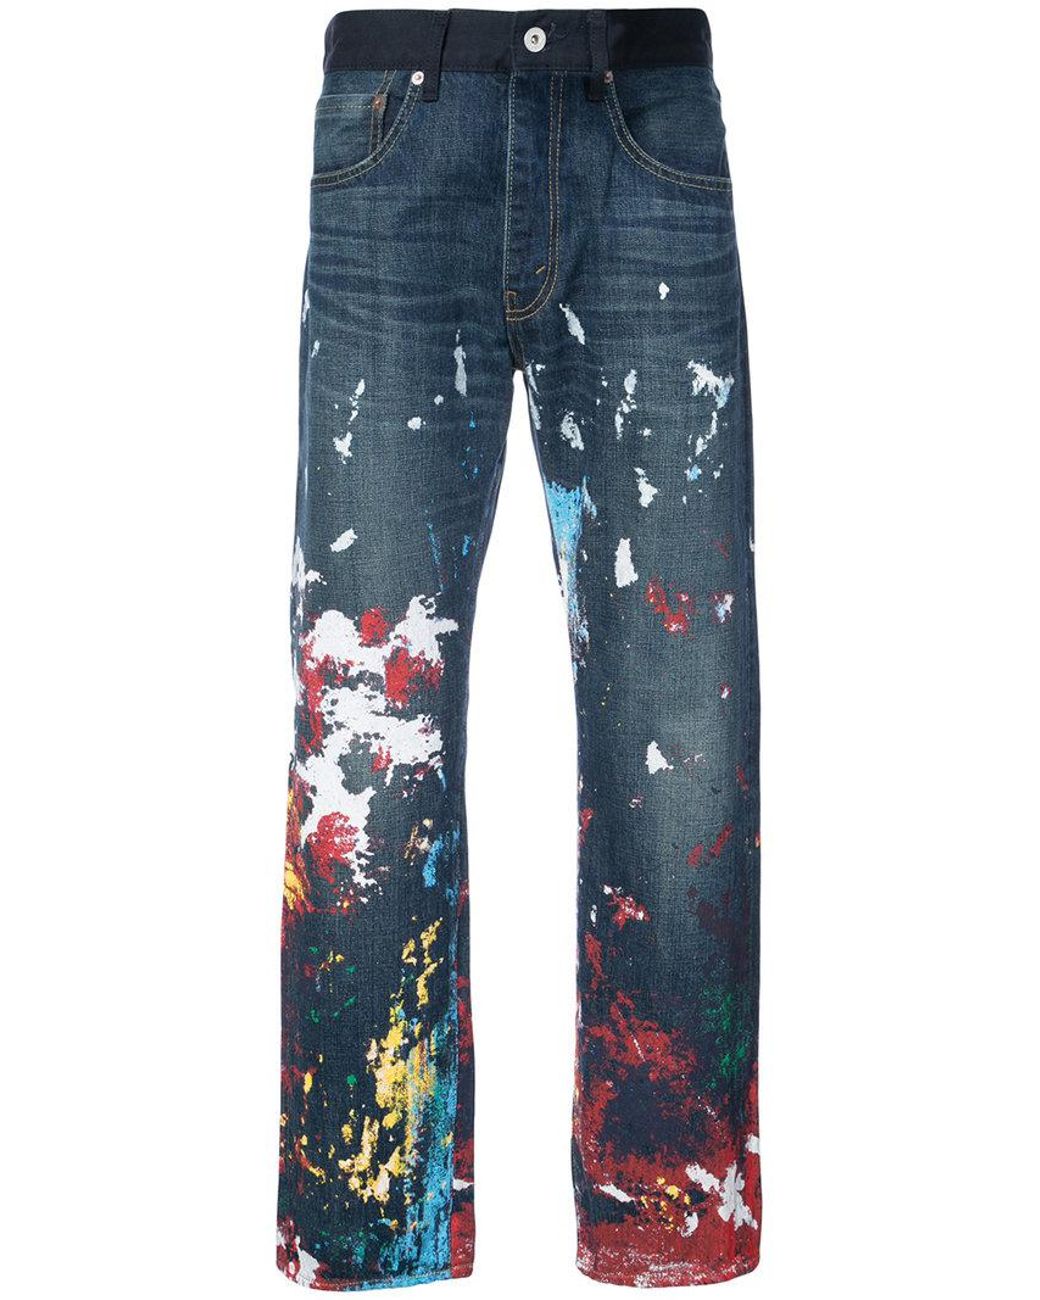 Carhartt Slim Fit Jeans With Paint Splash, Women's Fashion